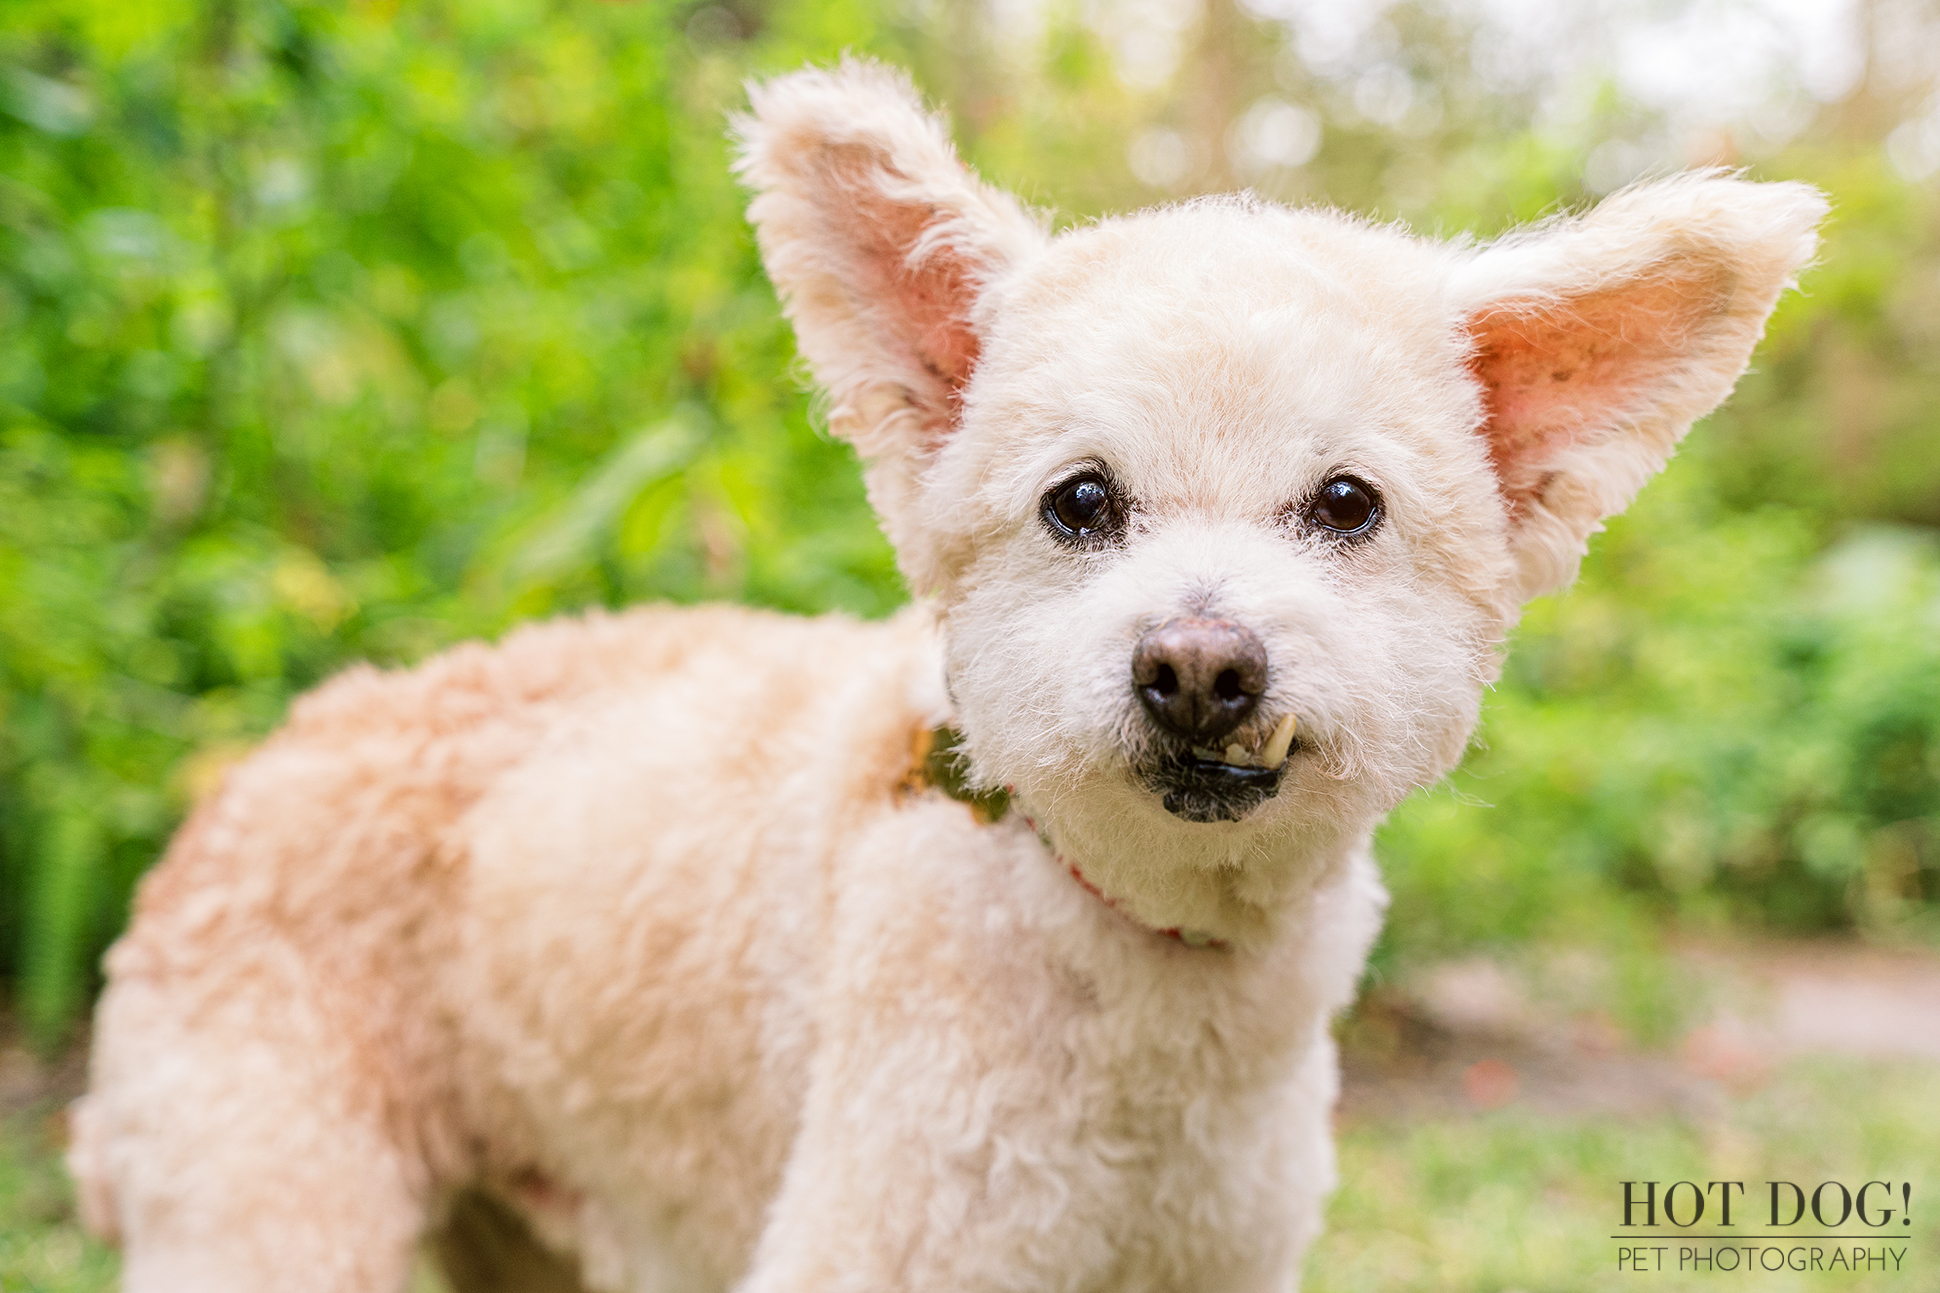 Pet photography session captures a sweet senior dog at Dickson Azalea Park.